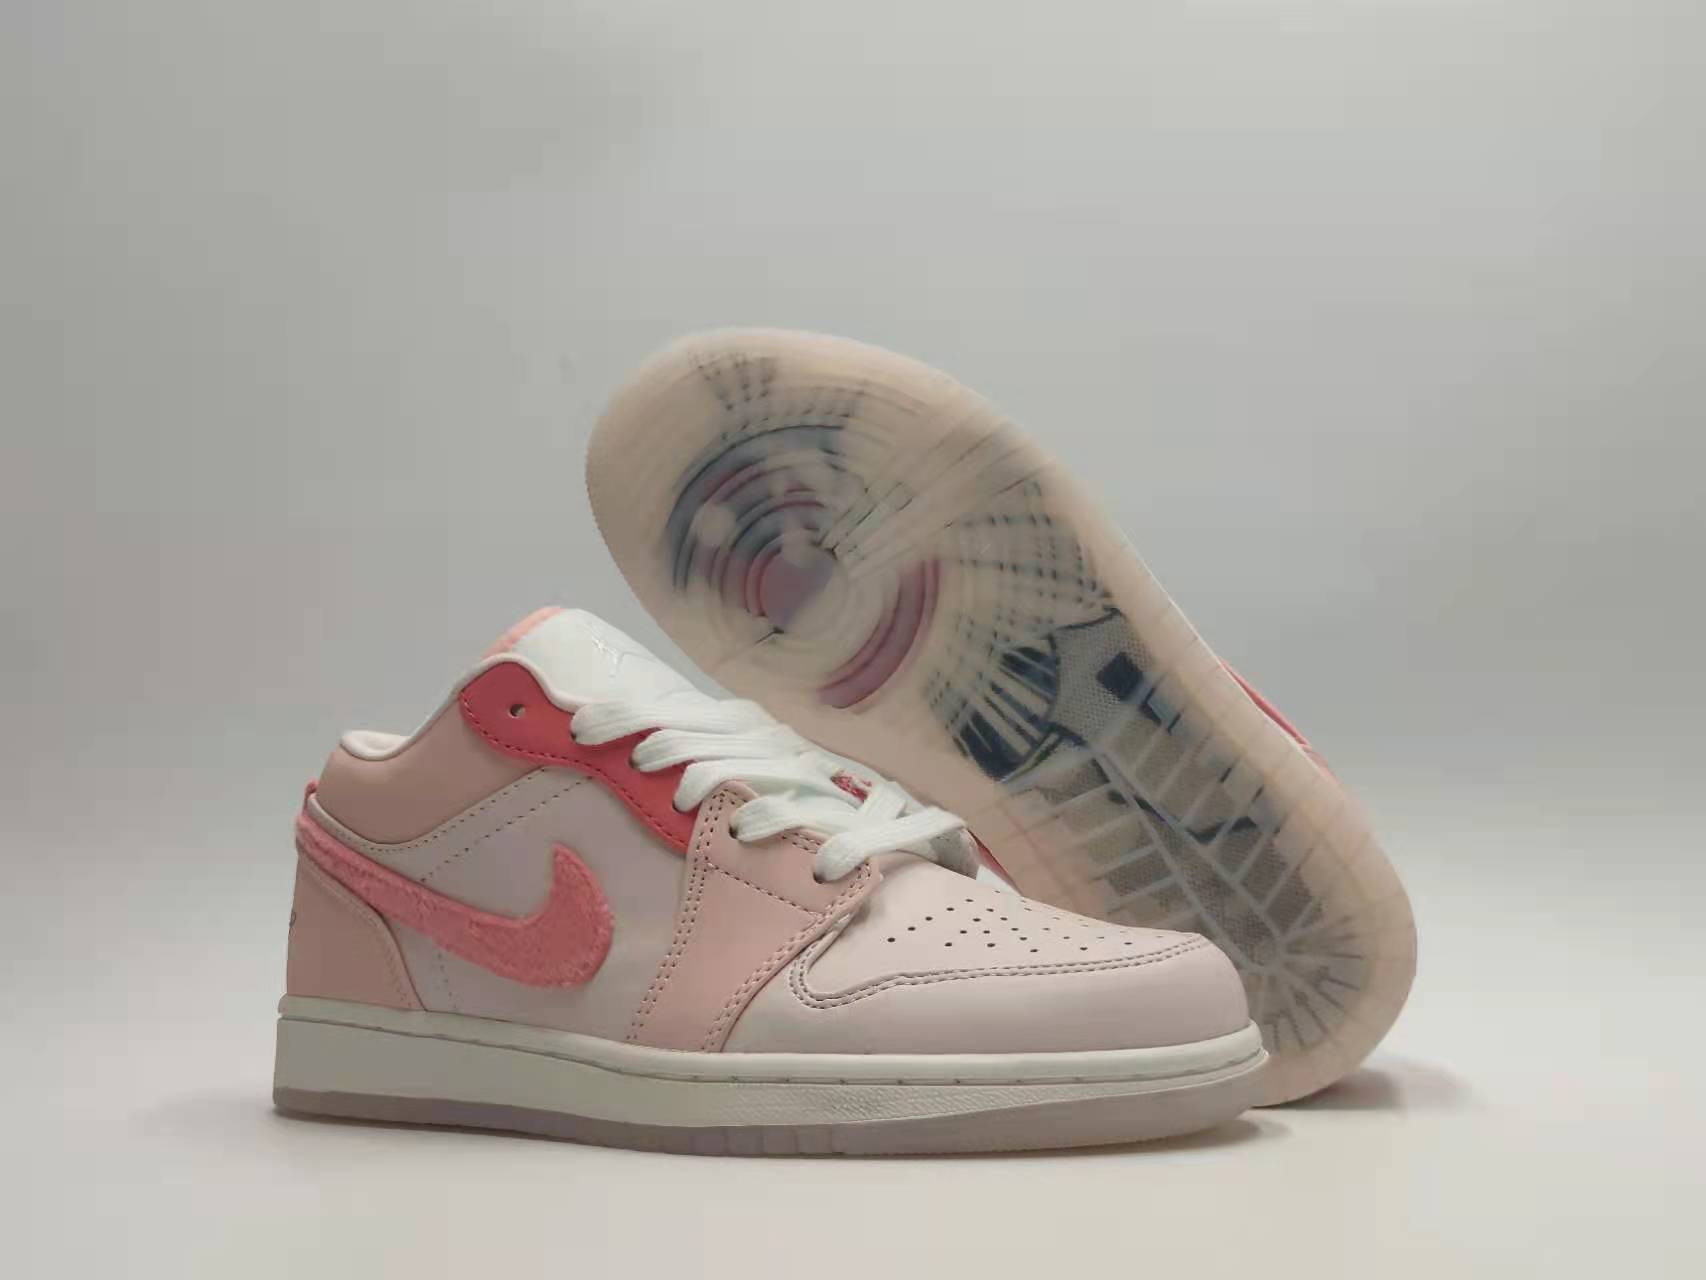 Women's Running Weapon Air Jordan 1 Pink Shoes 0137